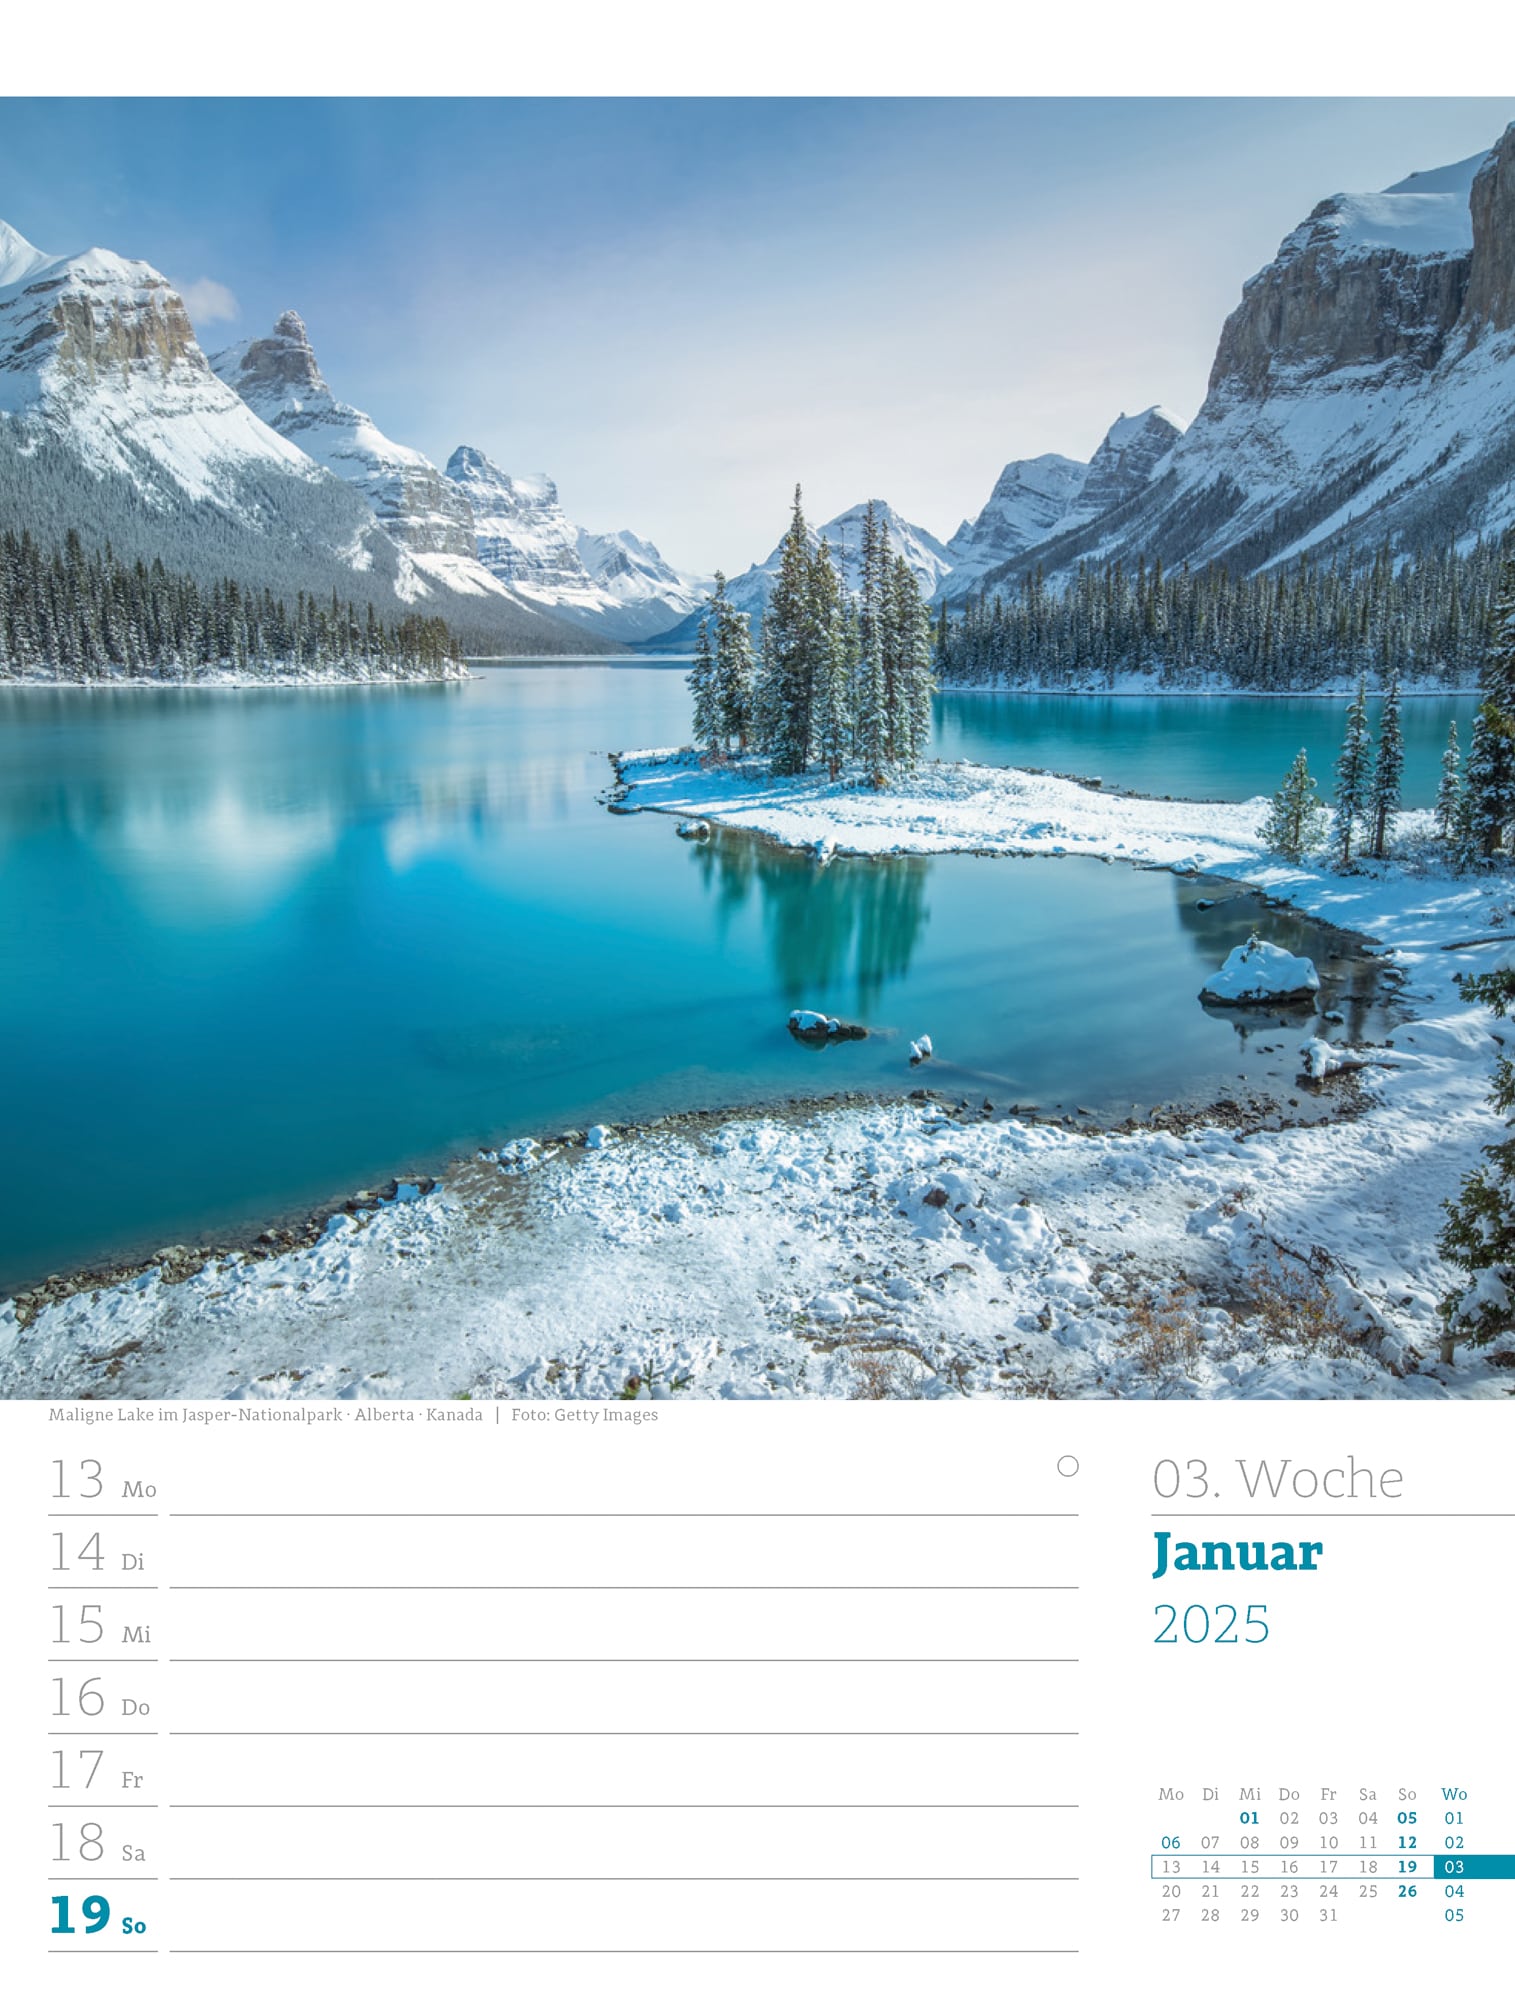 Ackermann Calendar Travel the World 2025 - Weekly Planner - Inside View 05